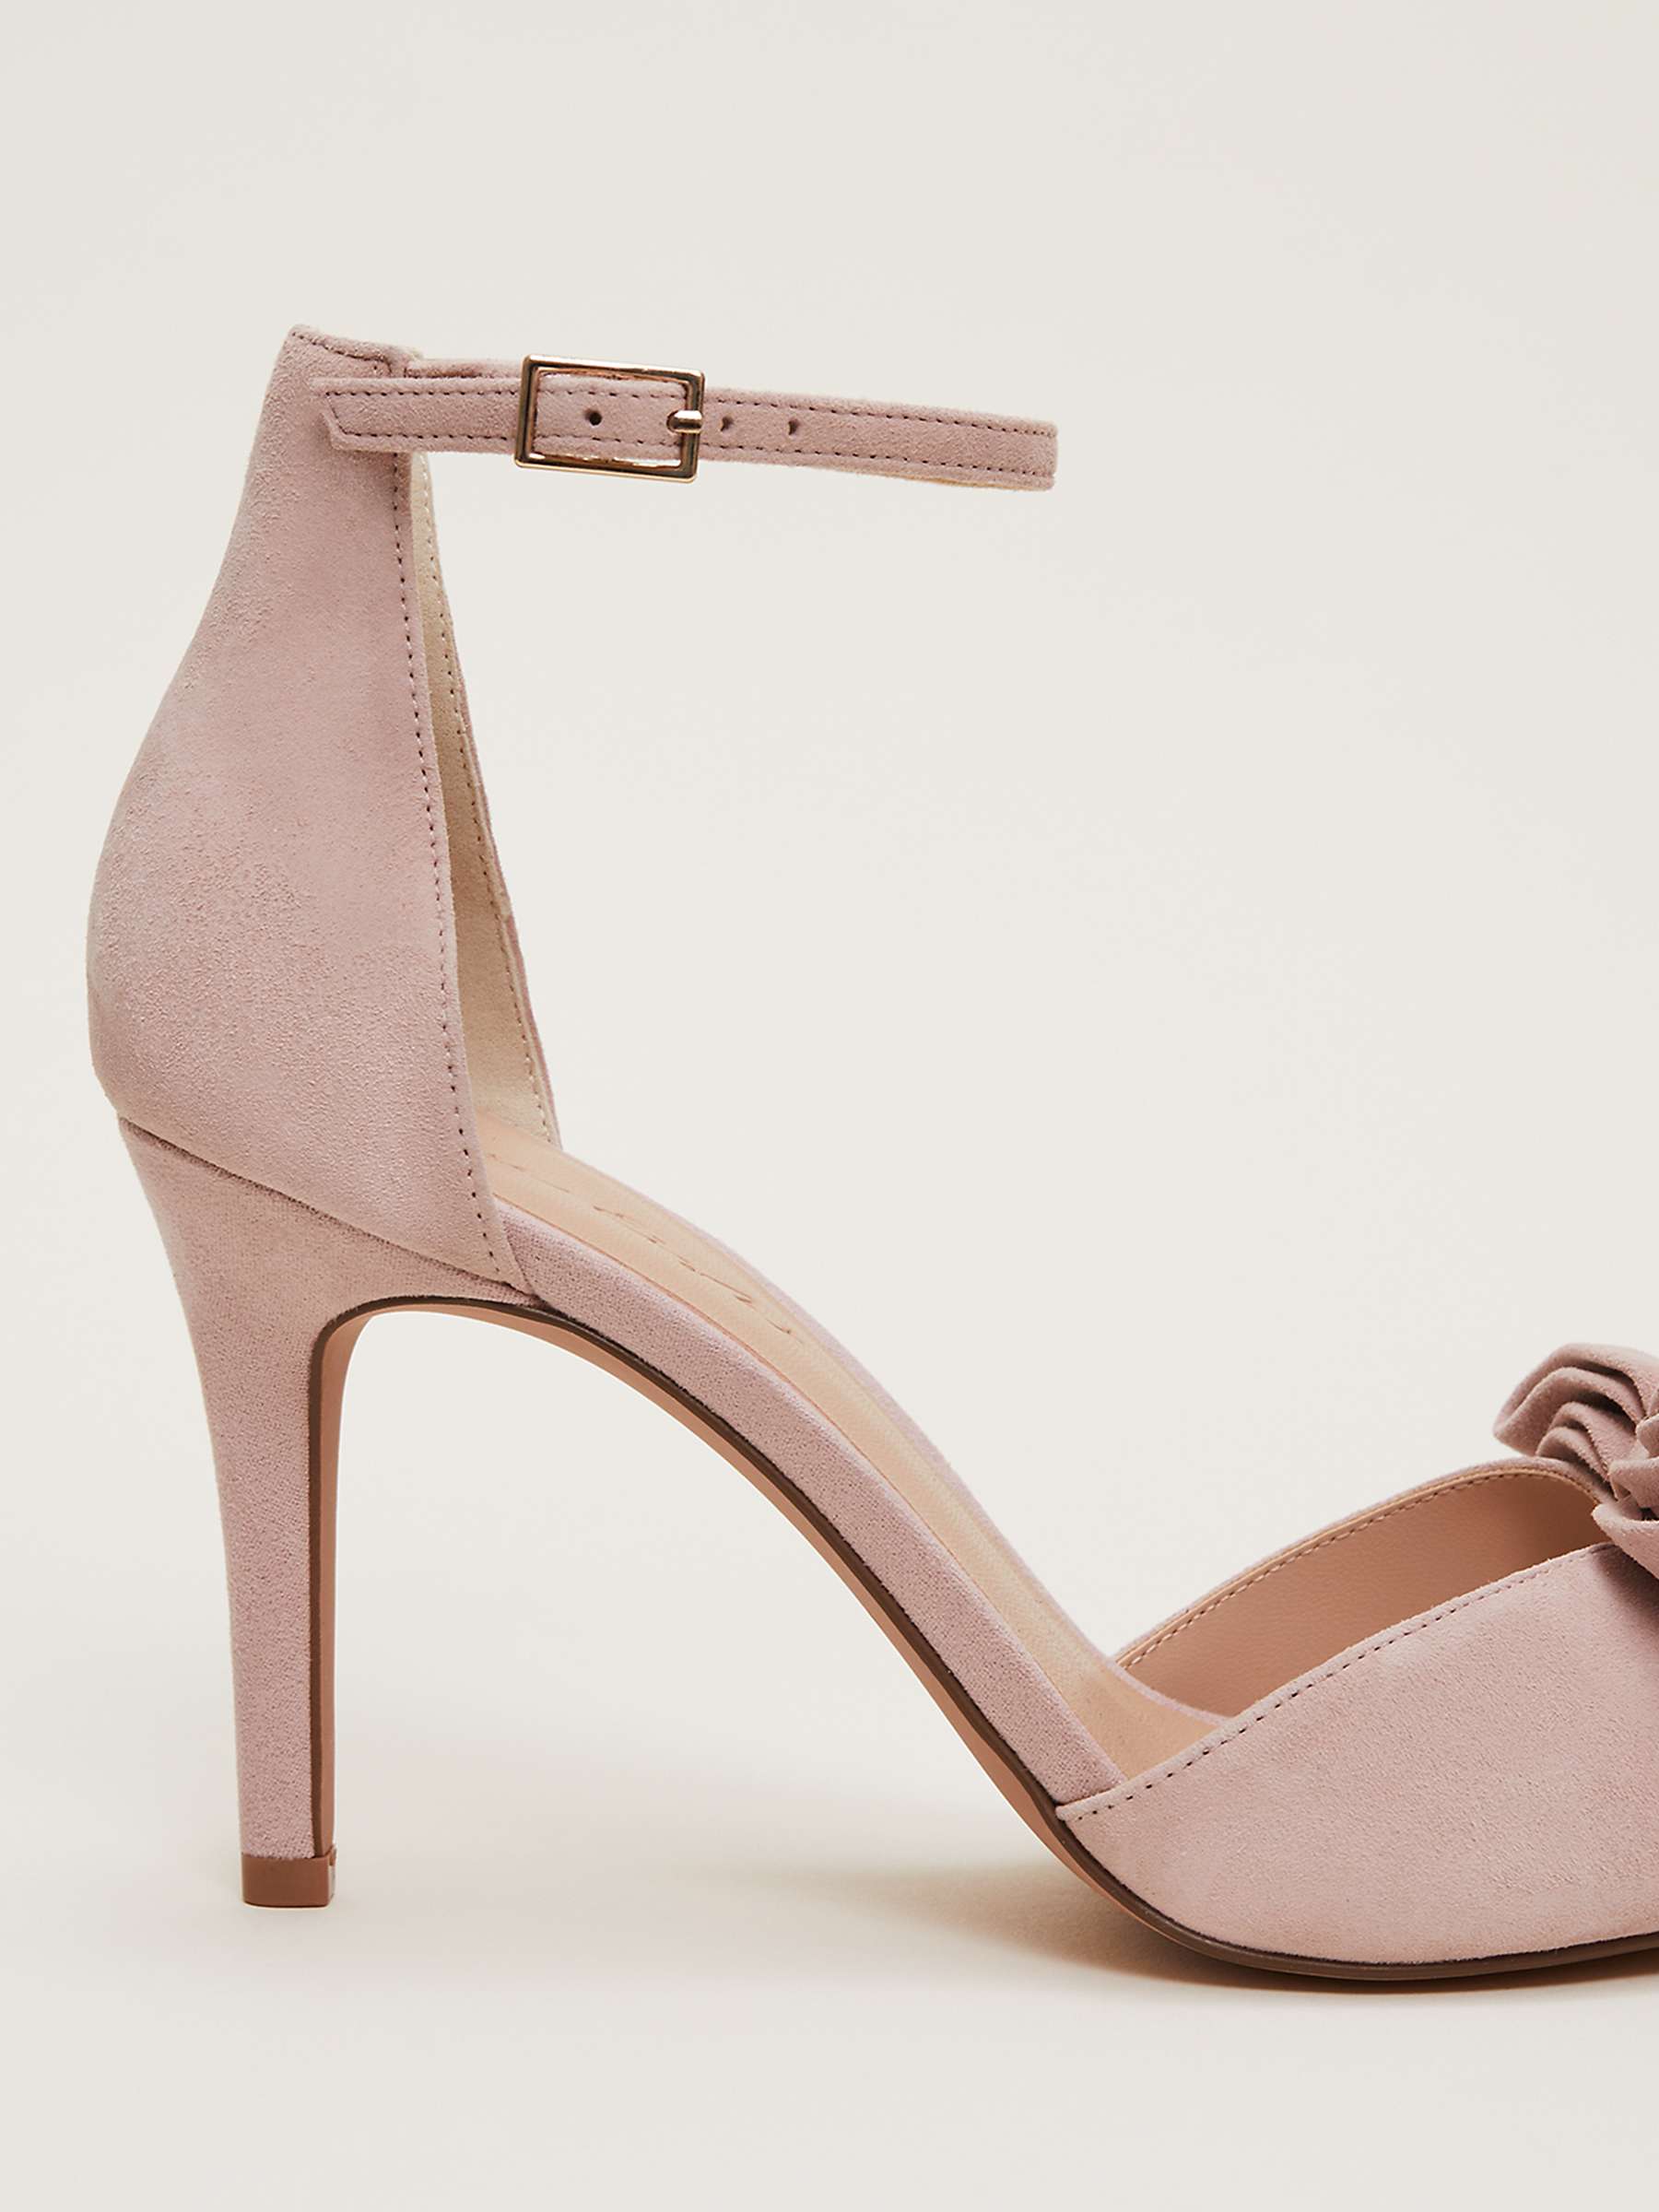 Buy Suede Bow Front High Heel Sandals, Antique Rose Online at johnlewis.com